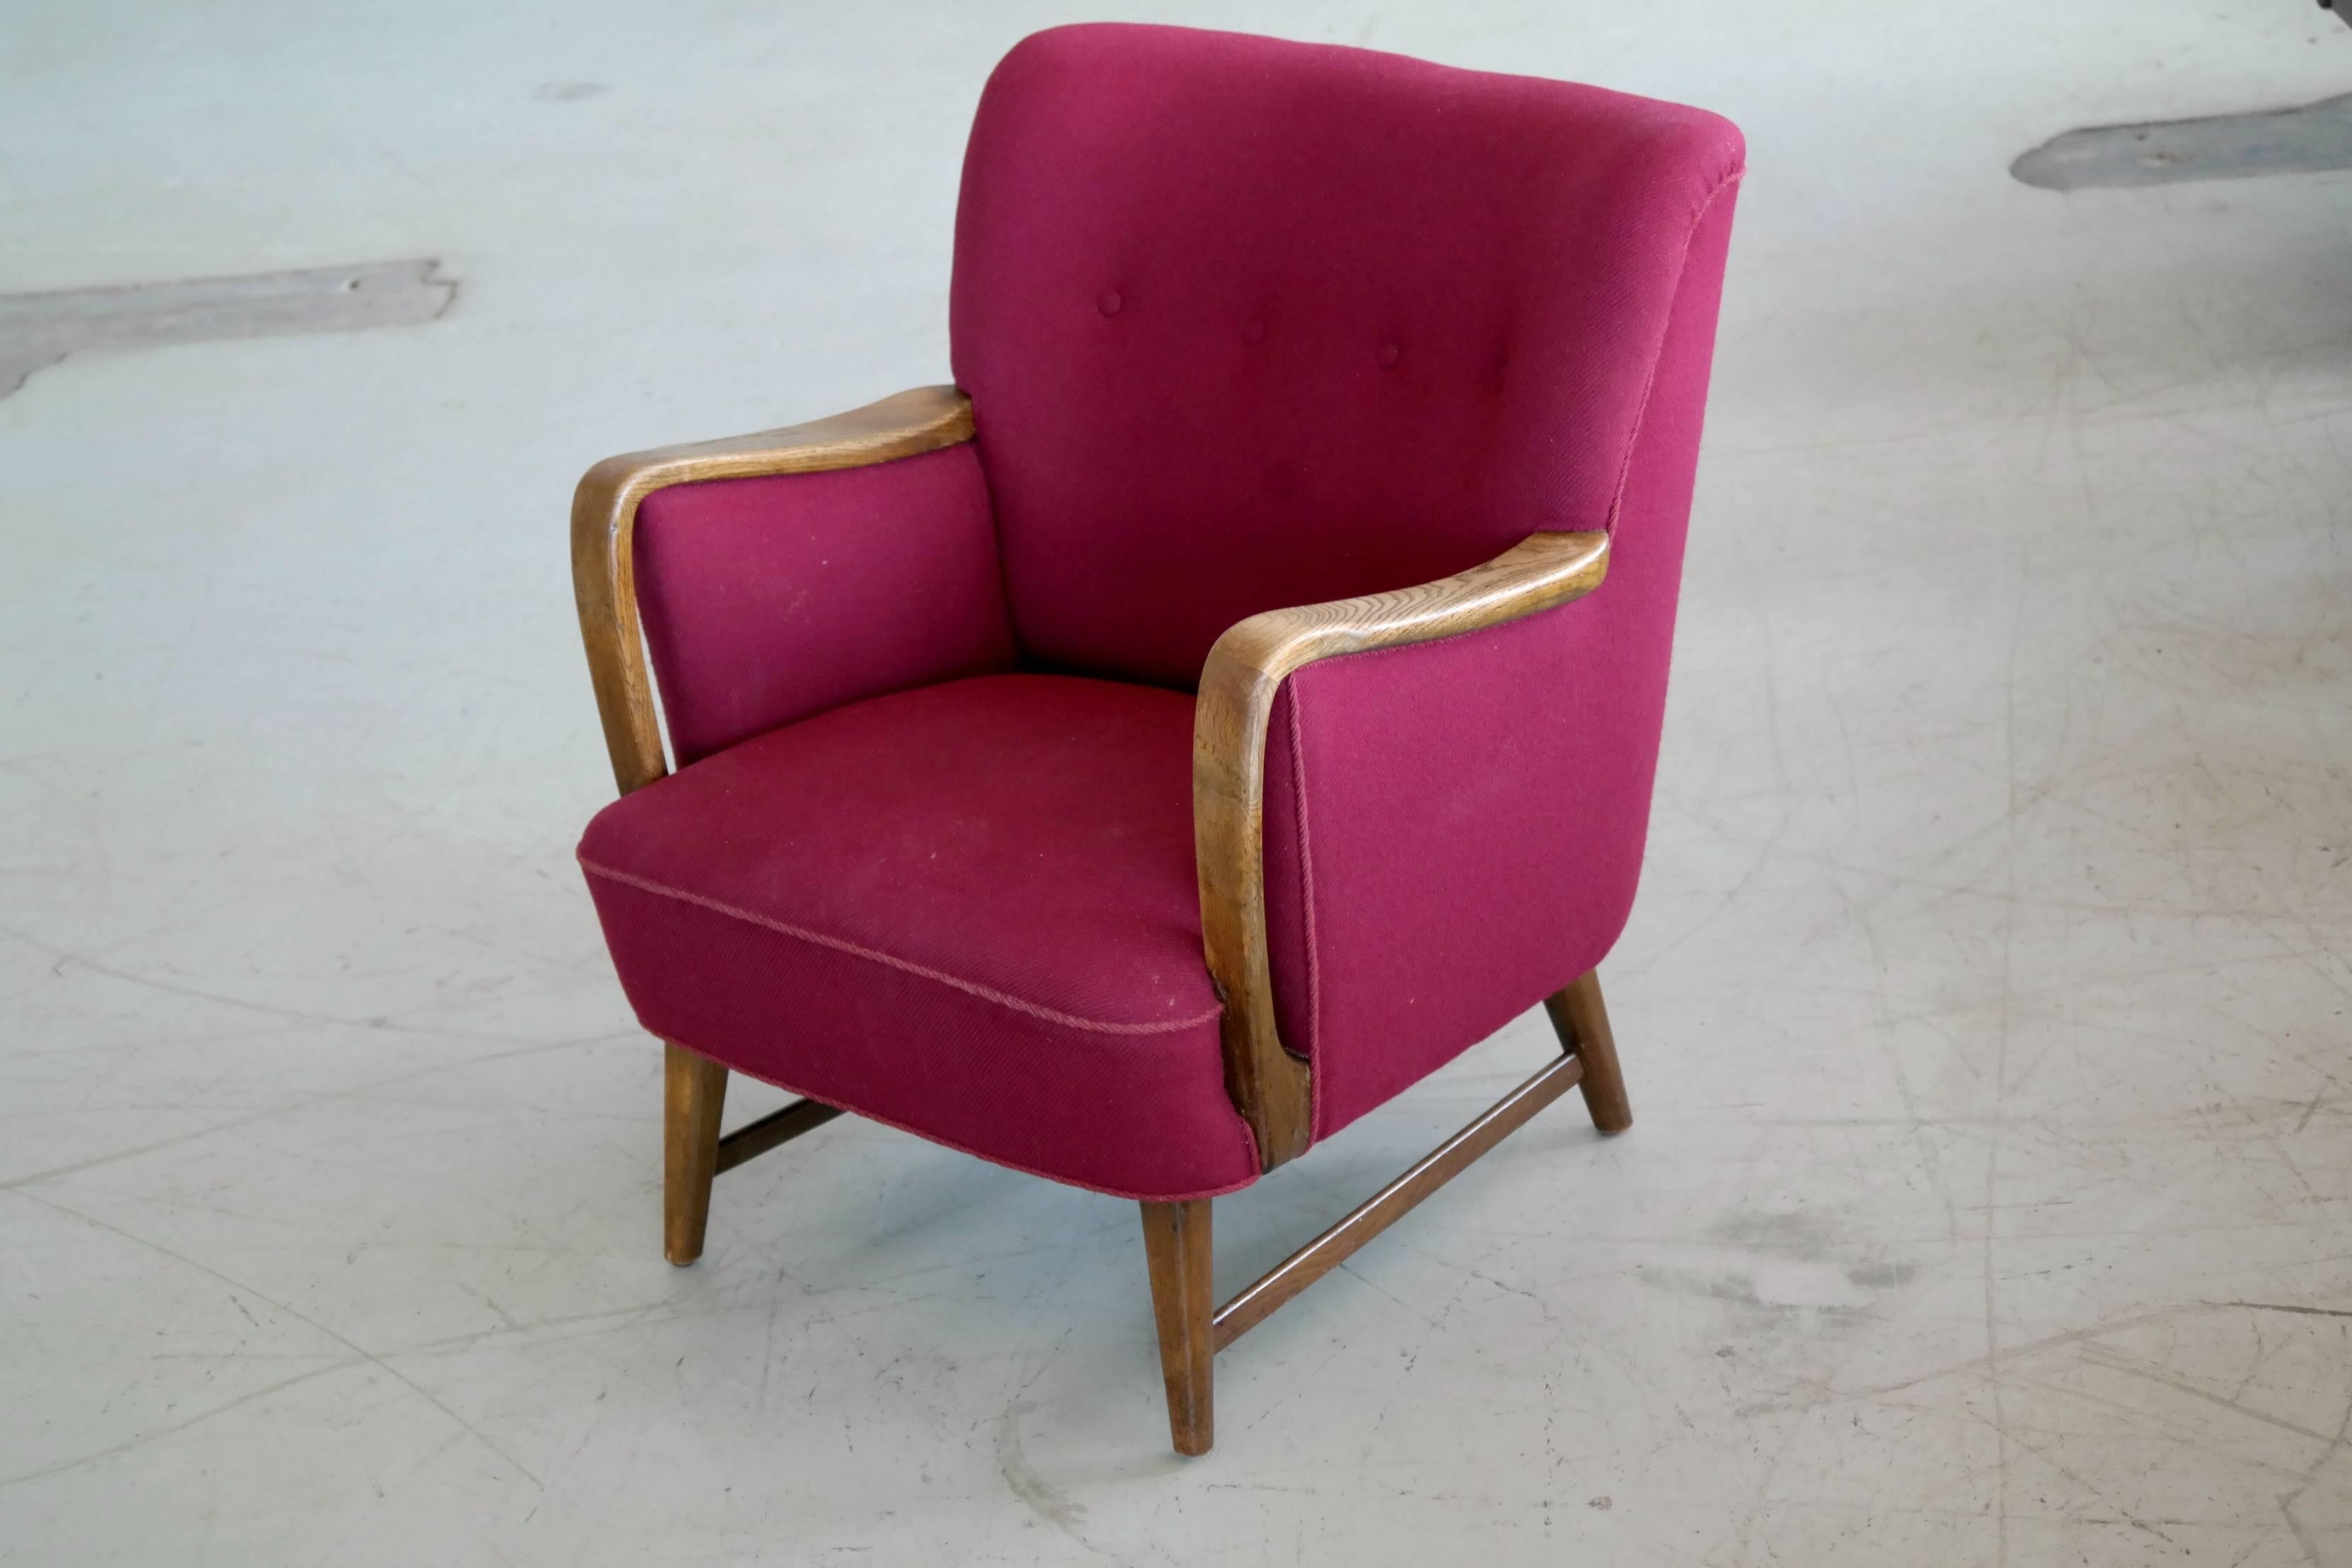 Mid-20th Century Midcentury Danish Lounge Chair Designed by Kurt Olsen for N.A. Jorgensen